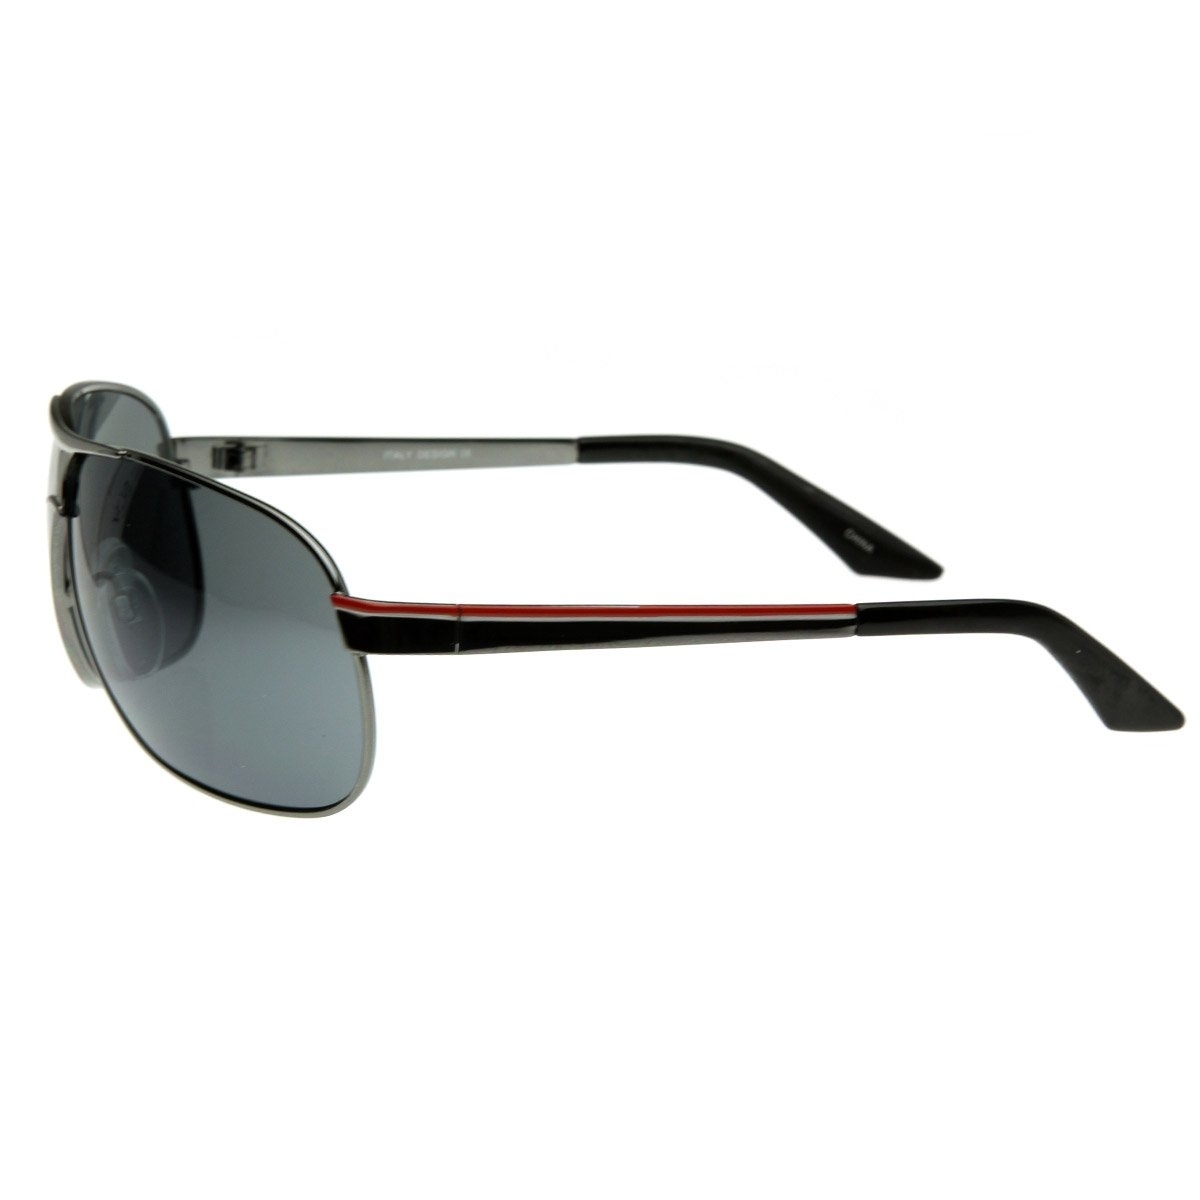 Square Aviator Large Metal Aviator Sunglasses - Gunmetal Red